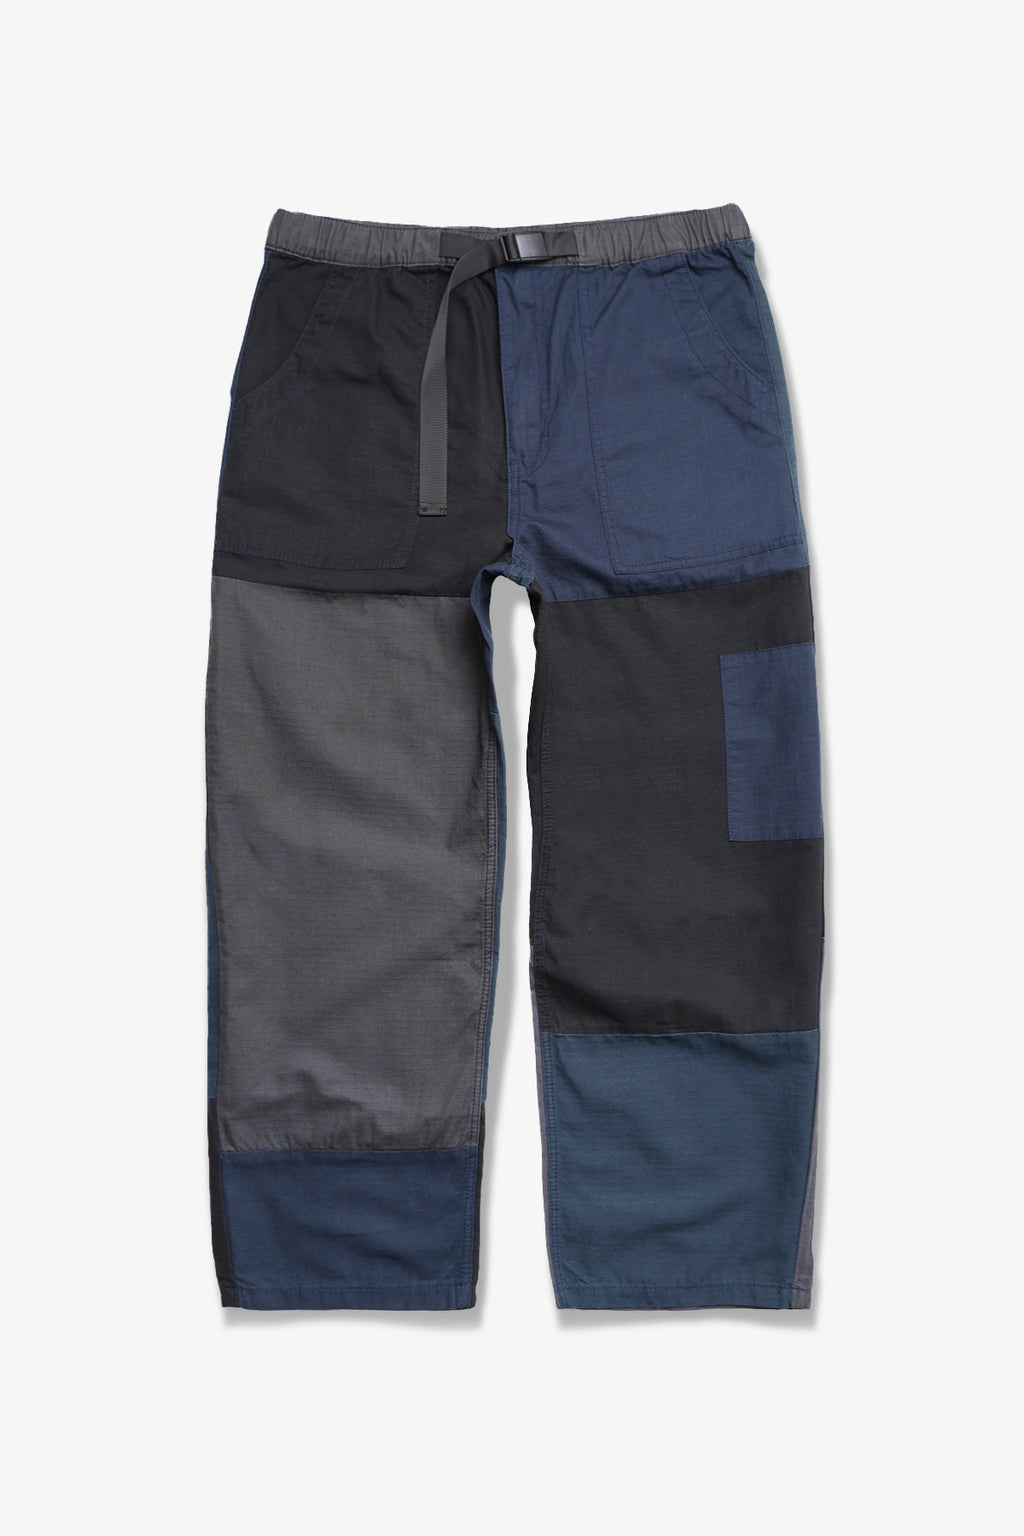 Blacksmith - Ripstop Patchwork Pants - Navy